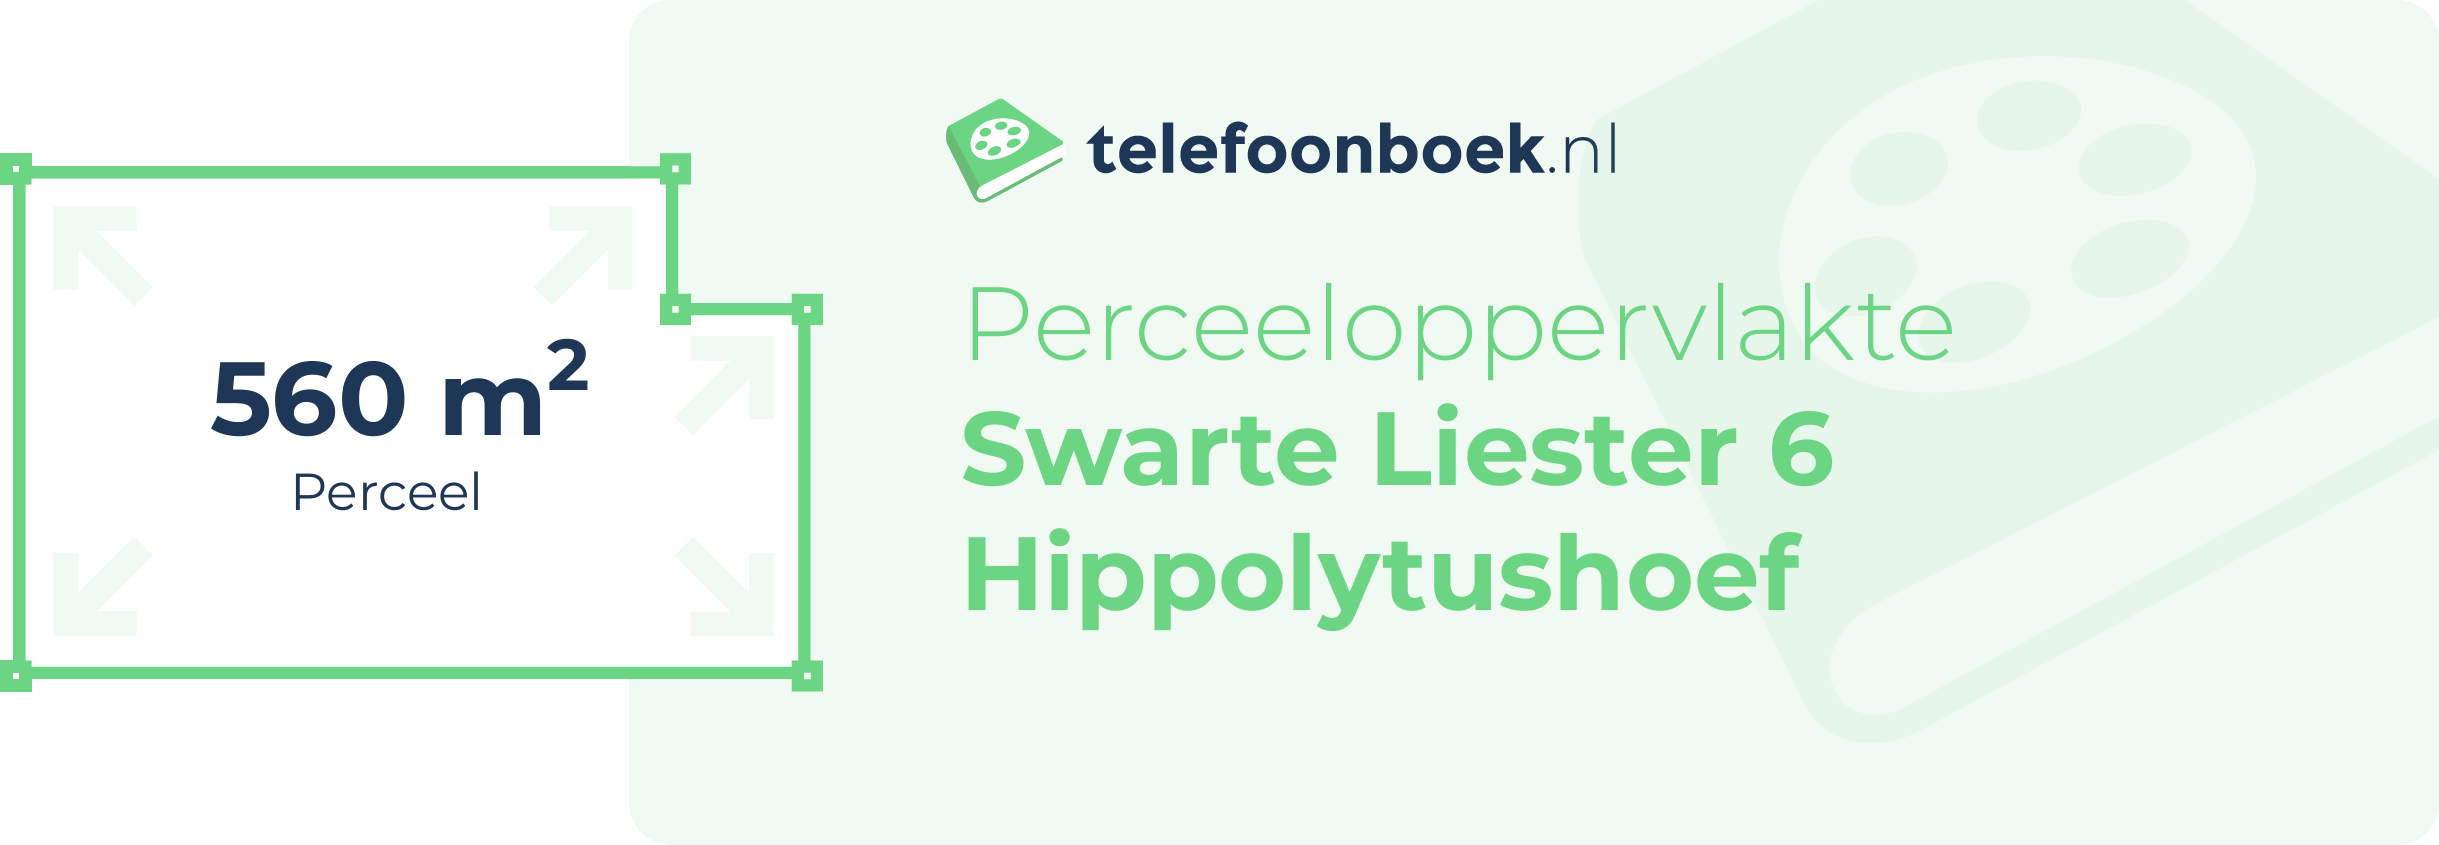 Perceeloppervlakte Swarte Liester 6 Hippolytushoef